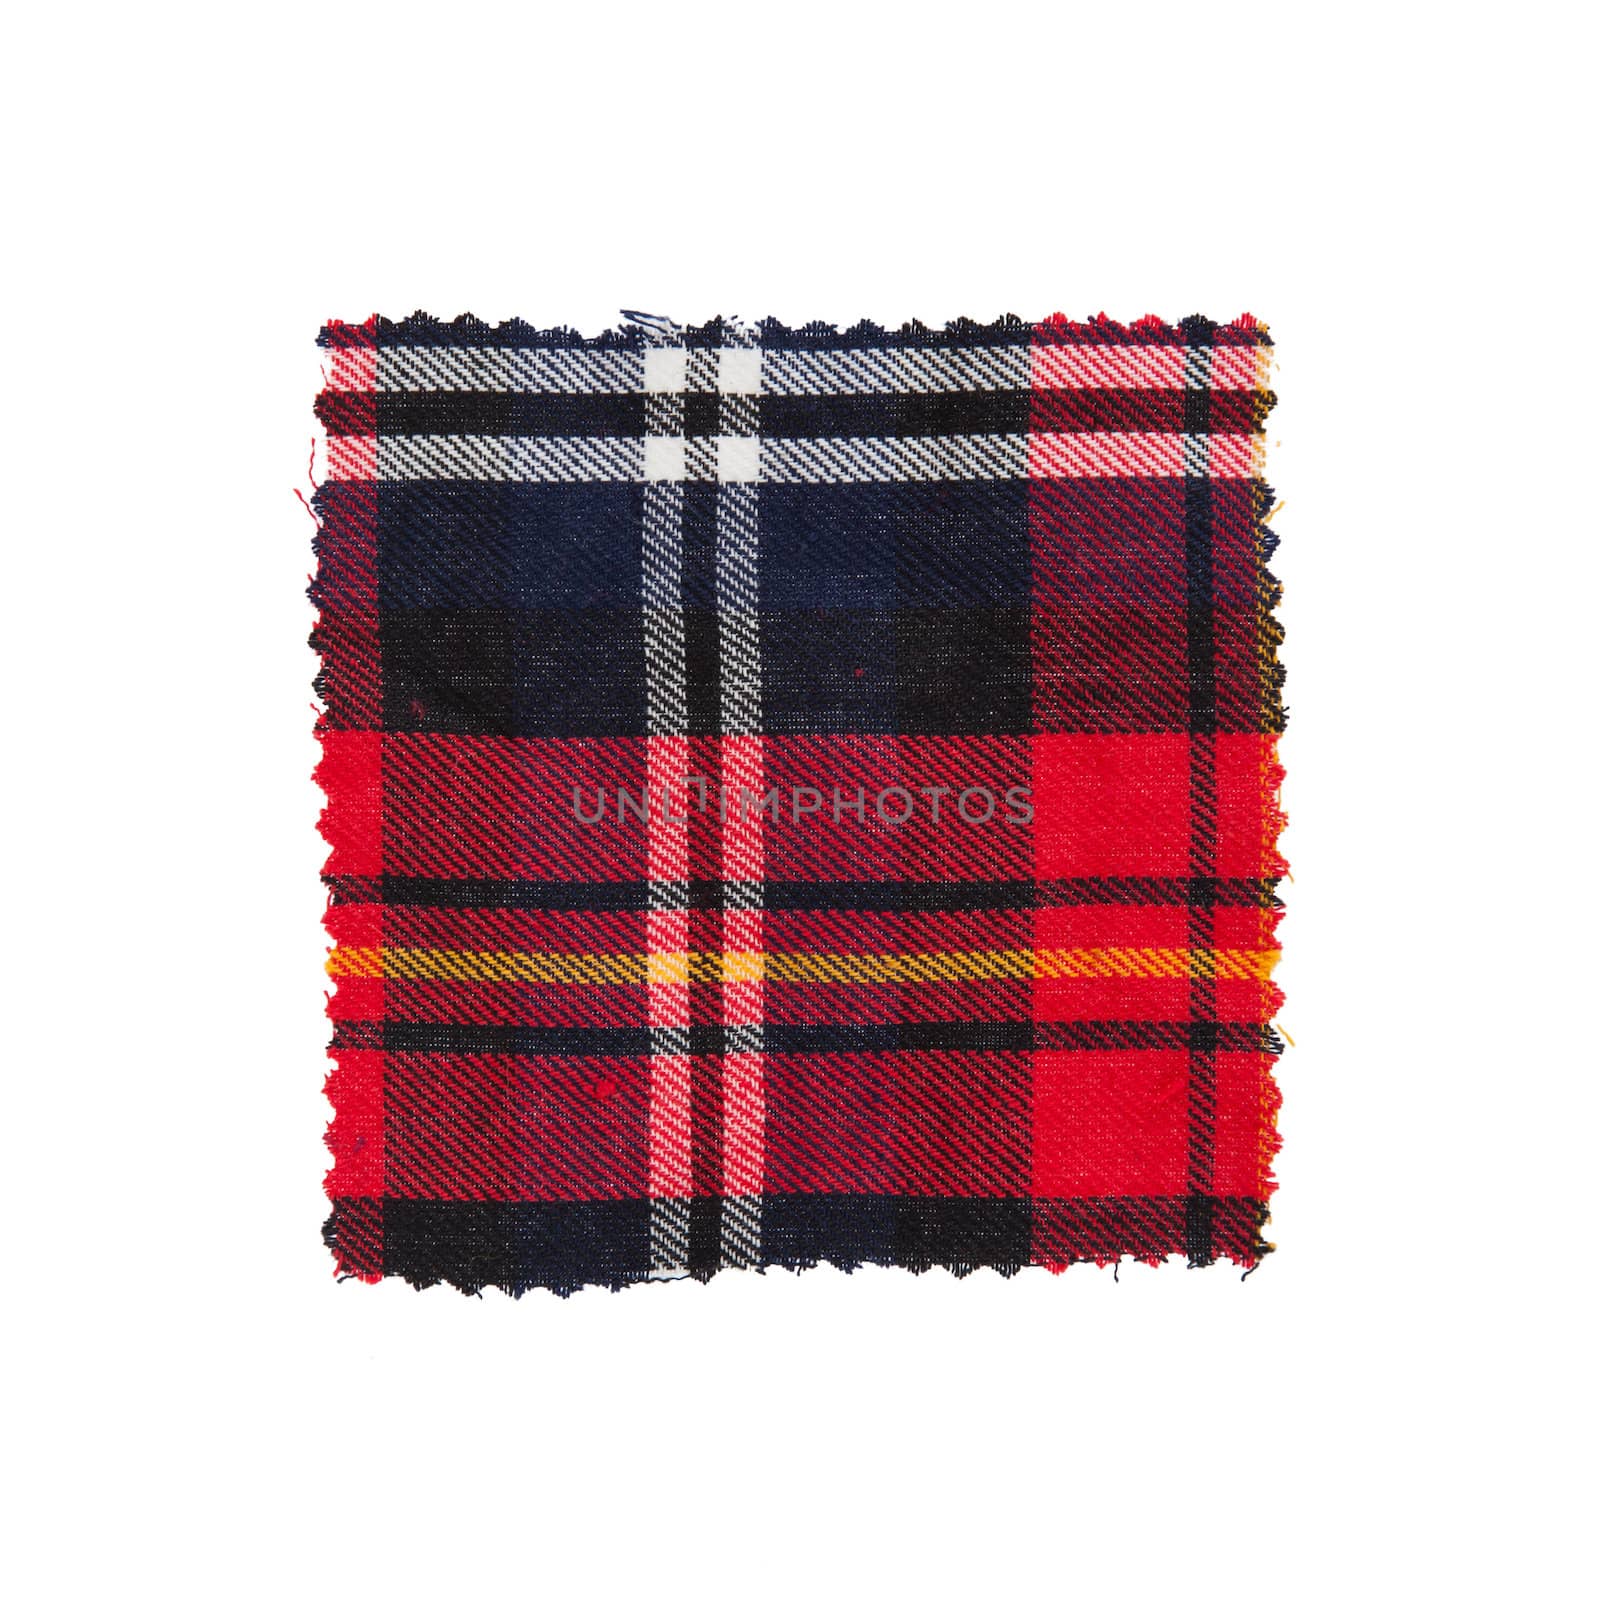 Scottish checked fabric by michaklootwijk